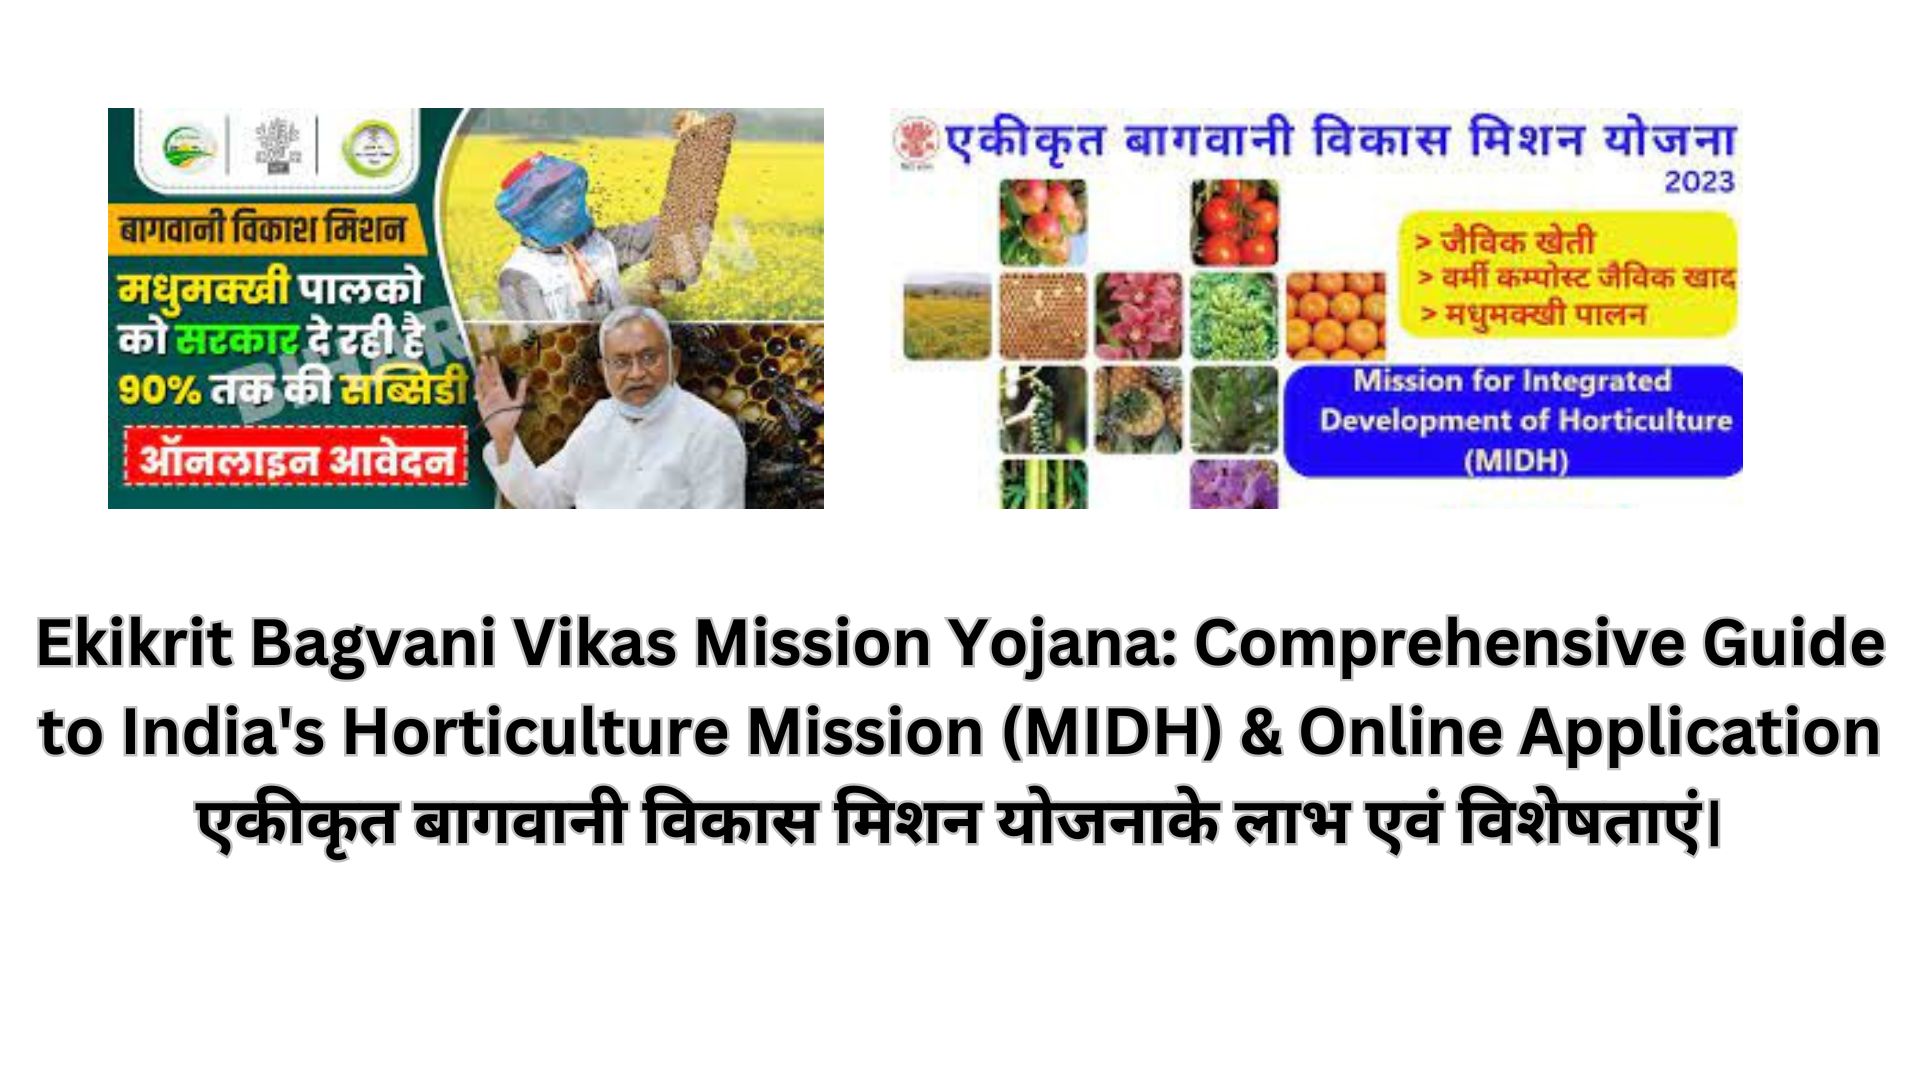 Ekikrit Bagvani Vikas Mission Yojana: Comprehensive Guide to India's Horticulture Mission (MIDH) & Online Application एकीकृत बागवानी विकास मिशन योजनाके लाभ एवं विशेषताएं।